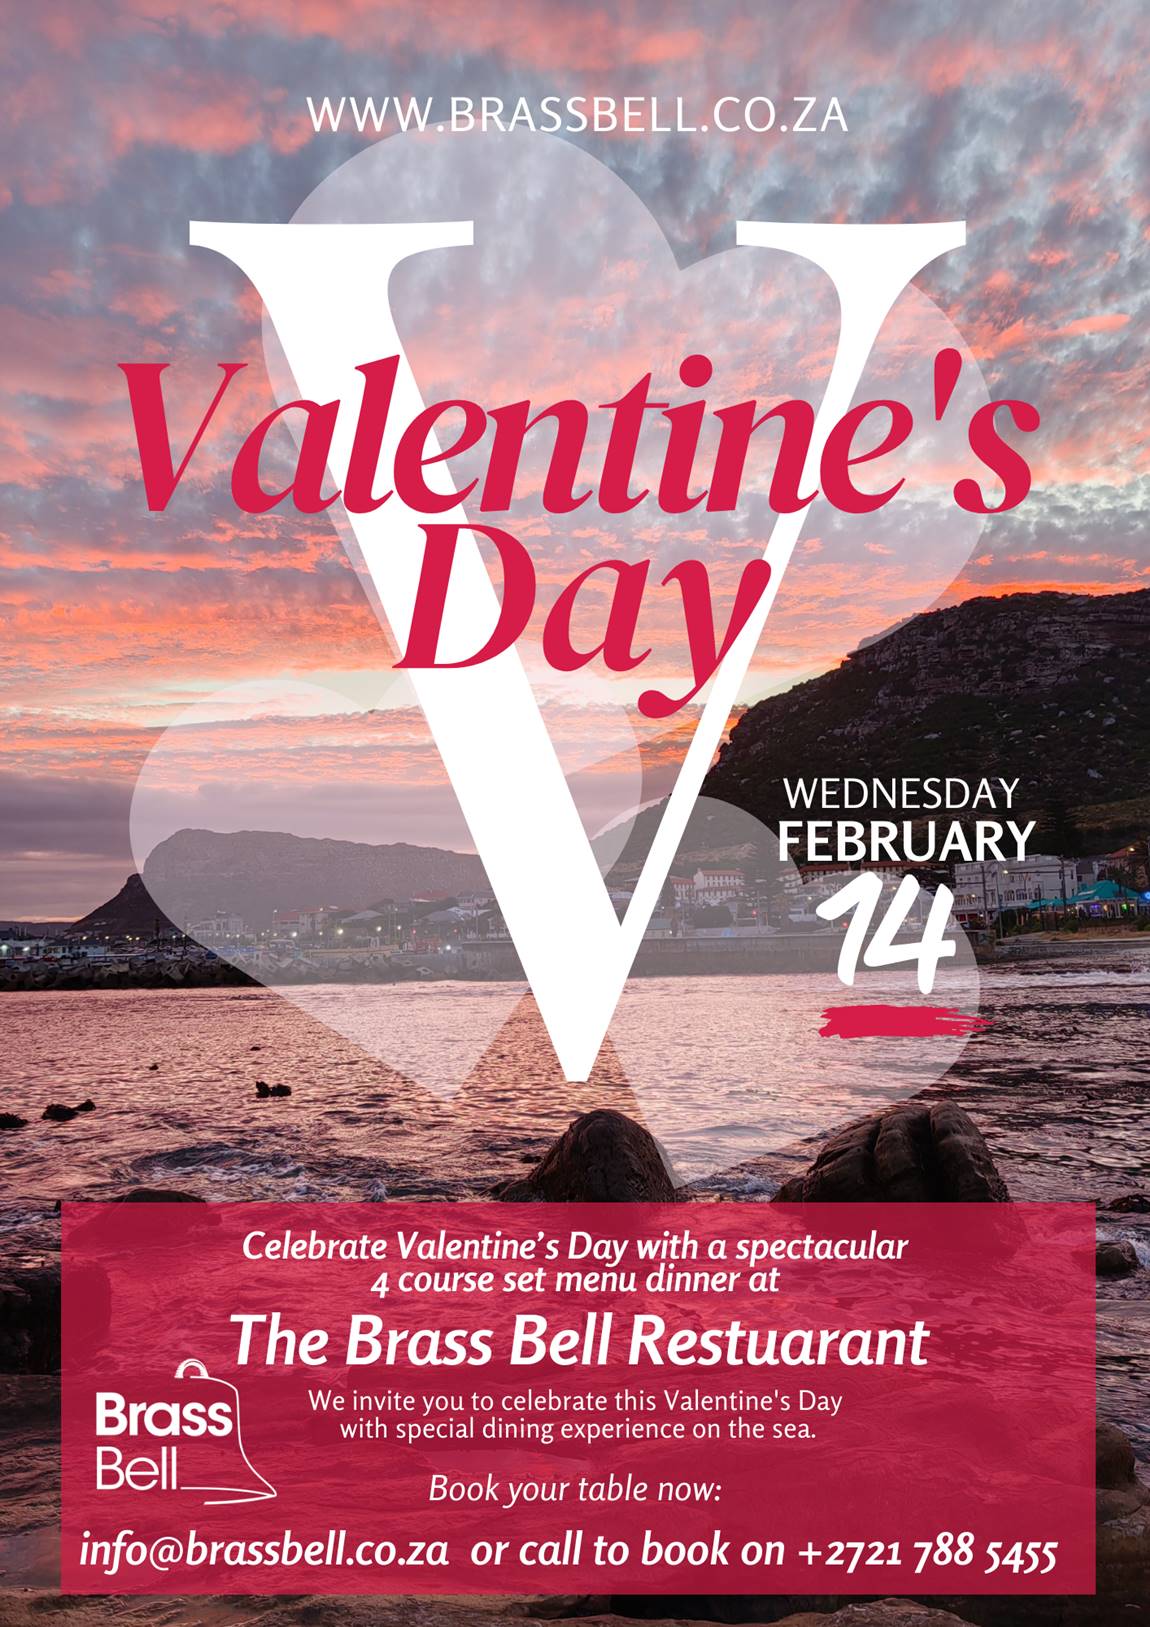 Brass Bell Grill - Cape Town